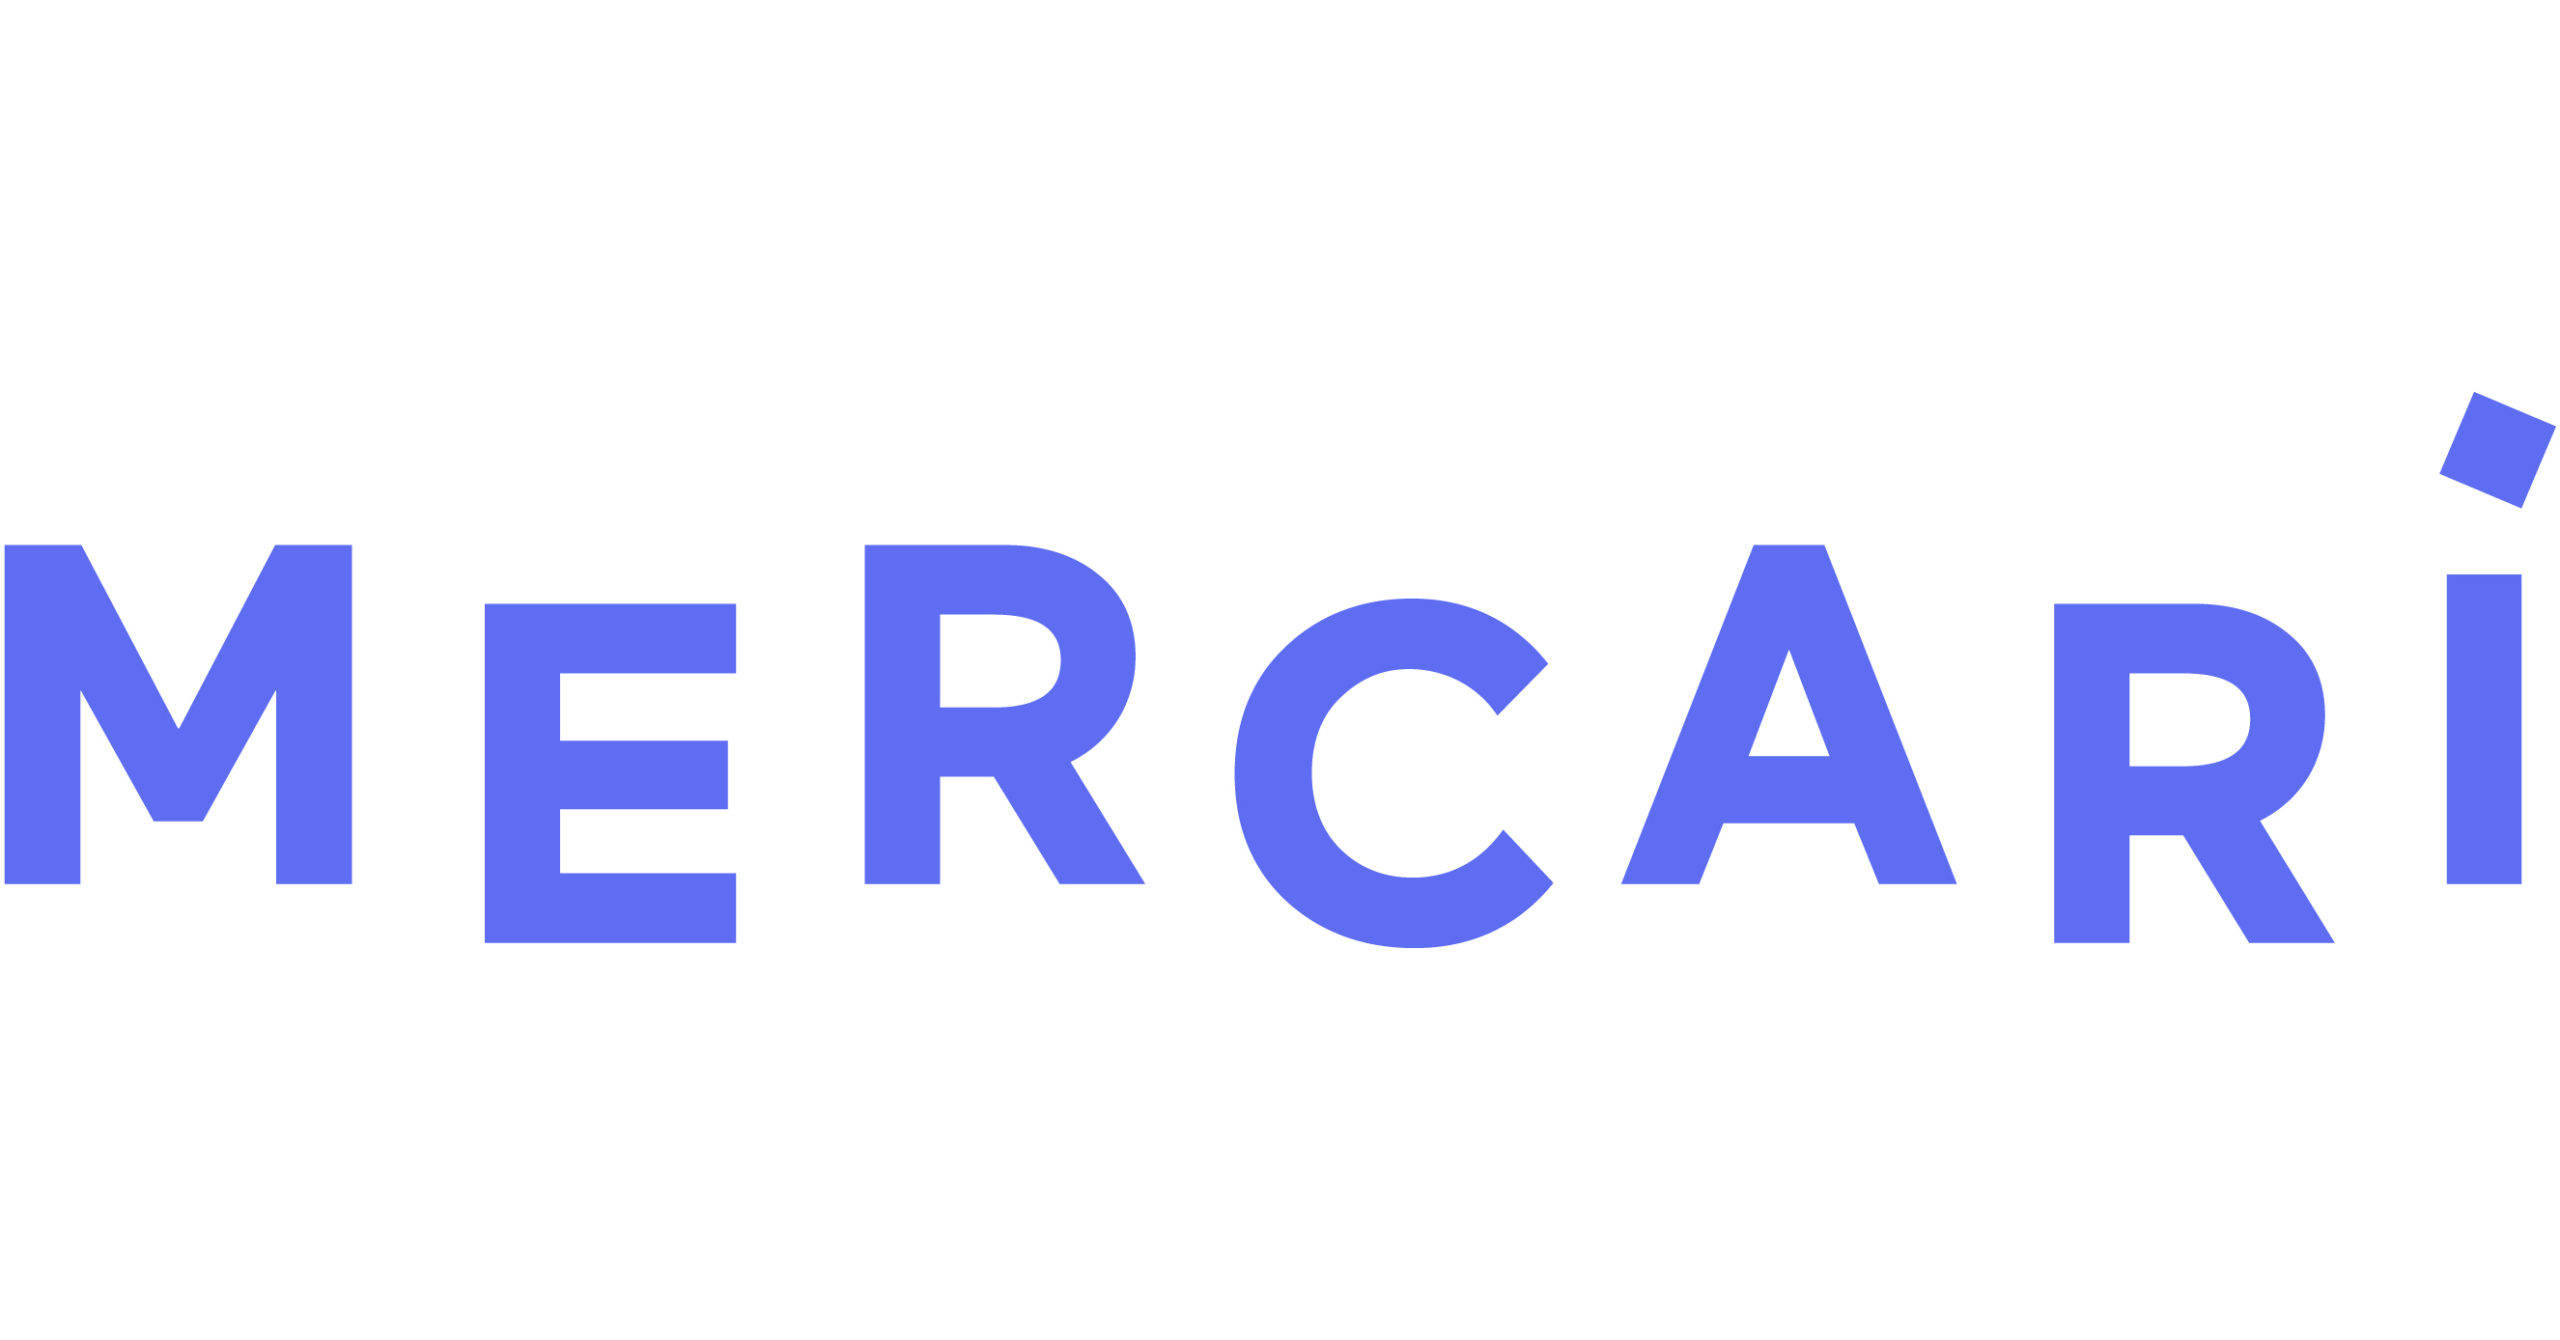 The Mercari app is worth a look